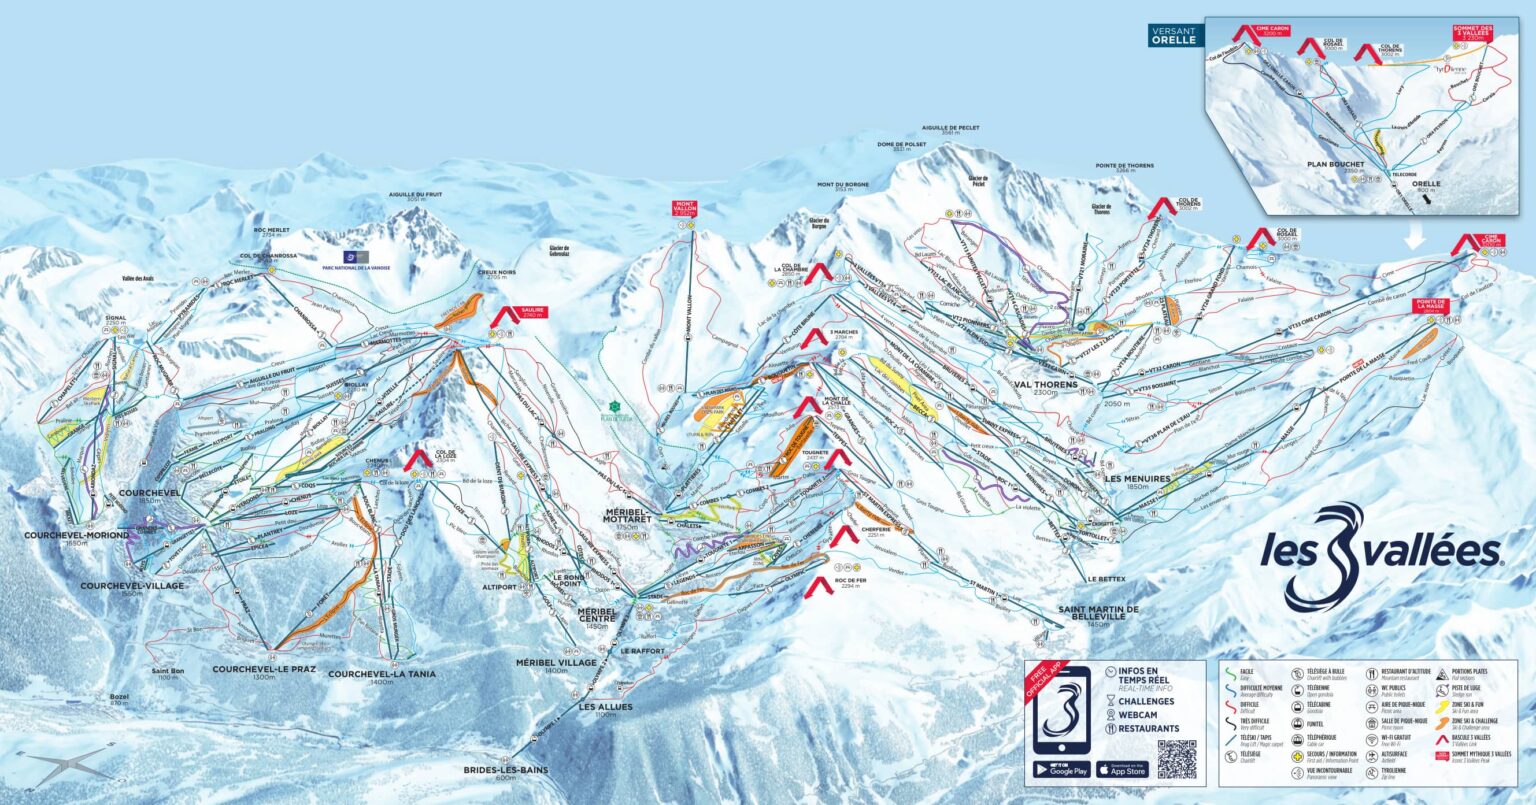 Brides-Les-Bains ski resort guide piste map